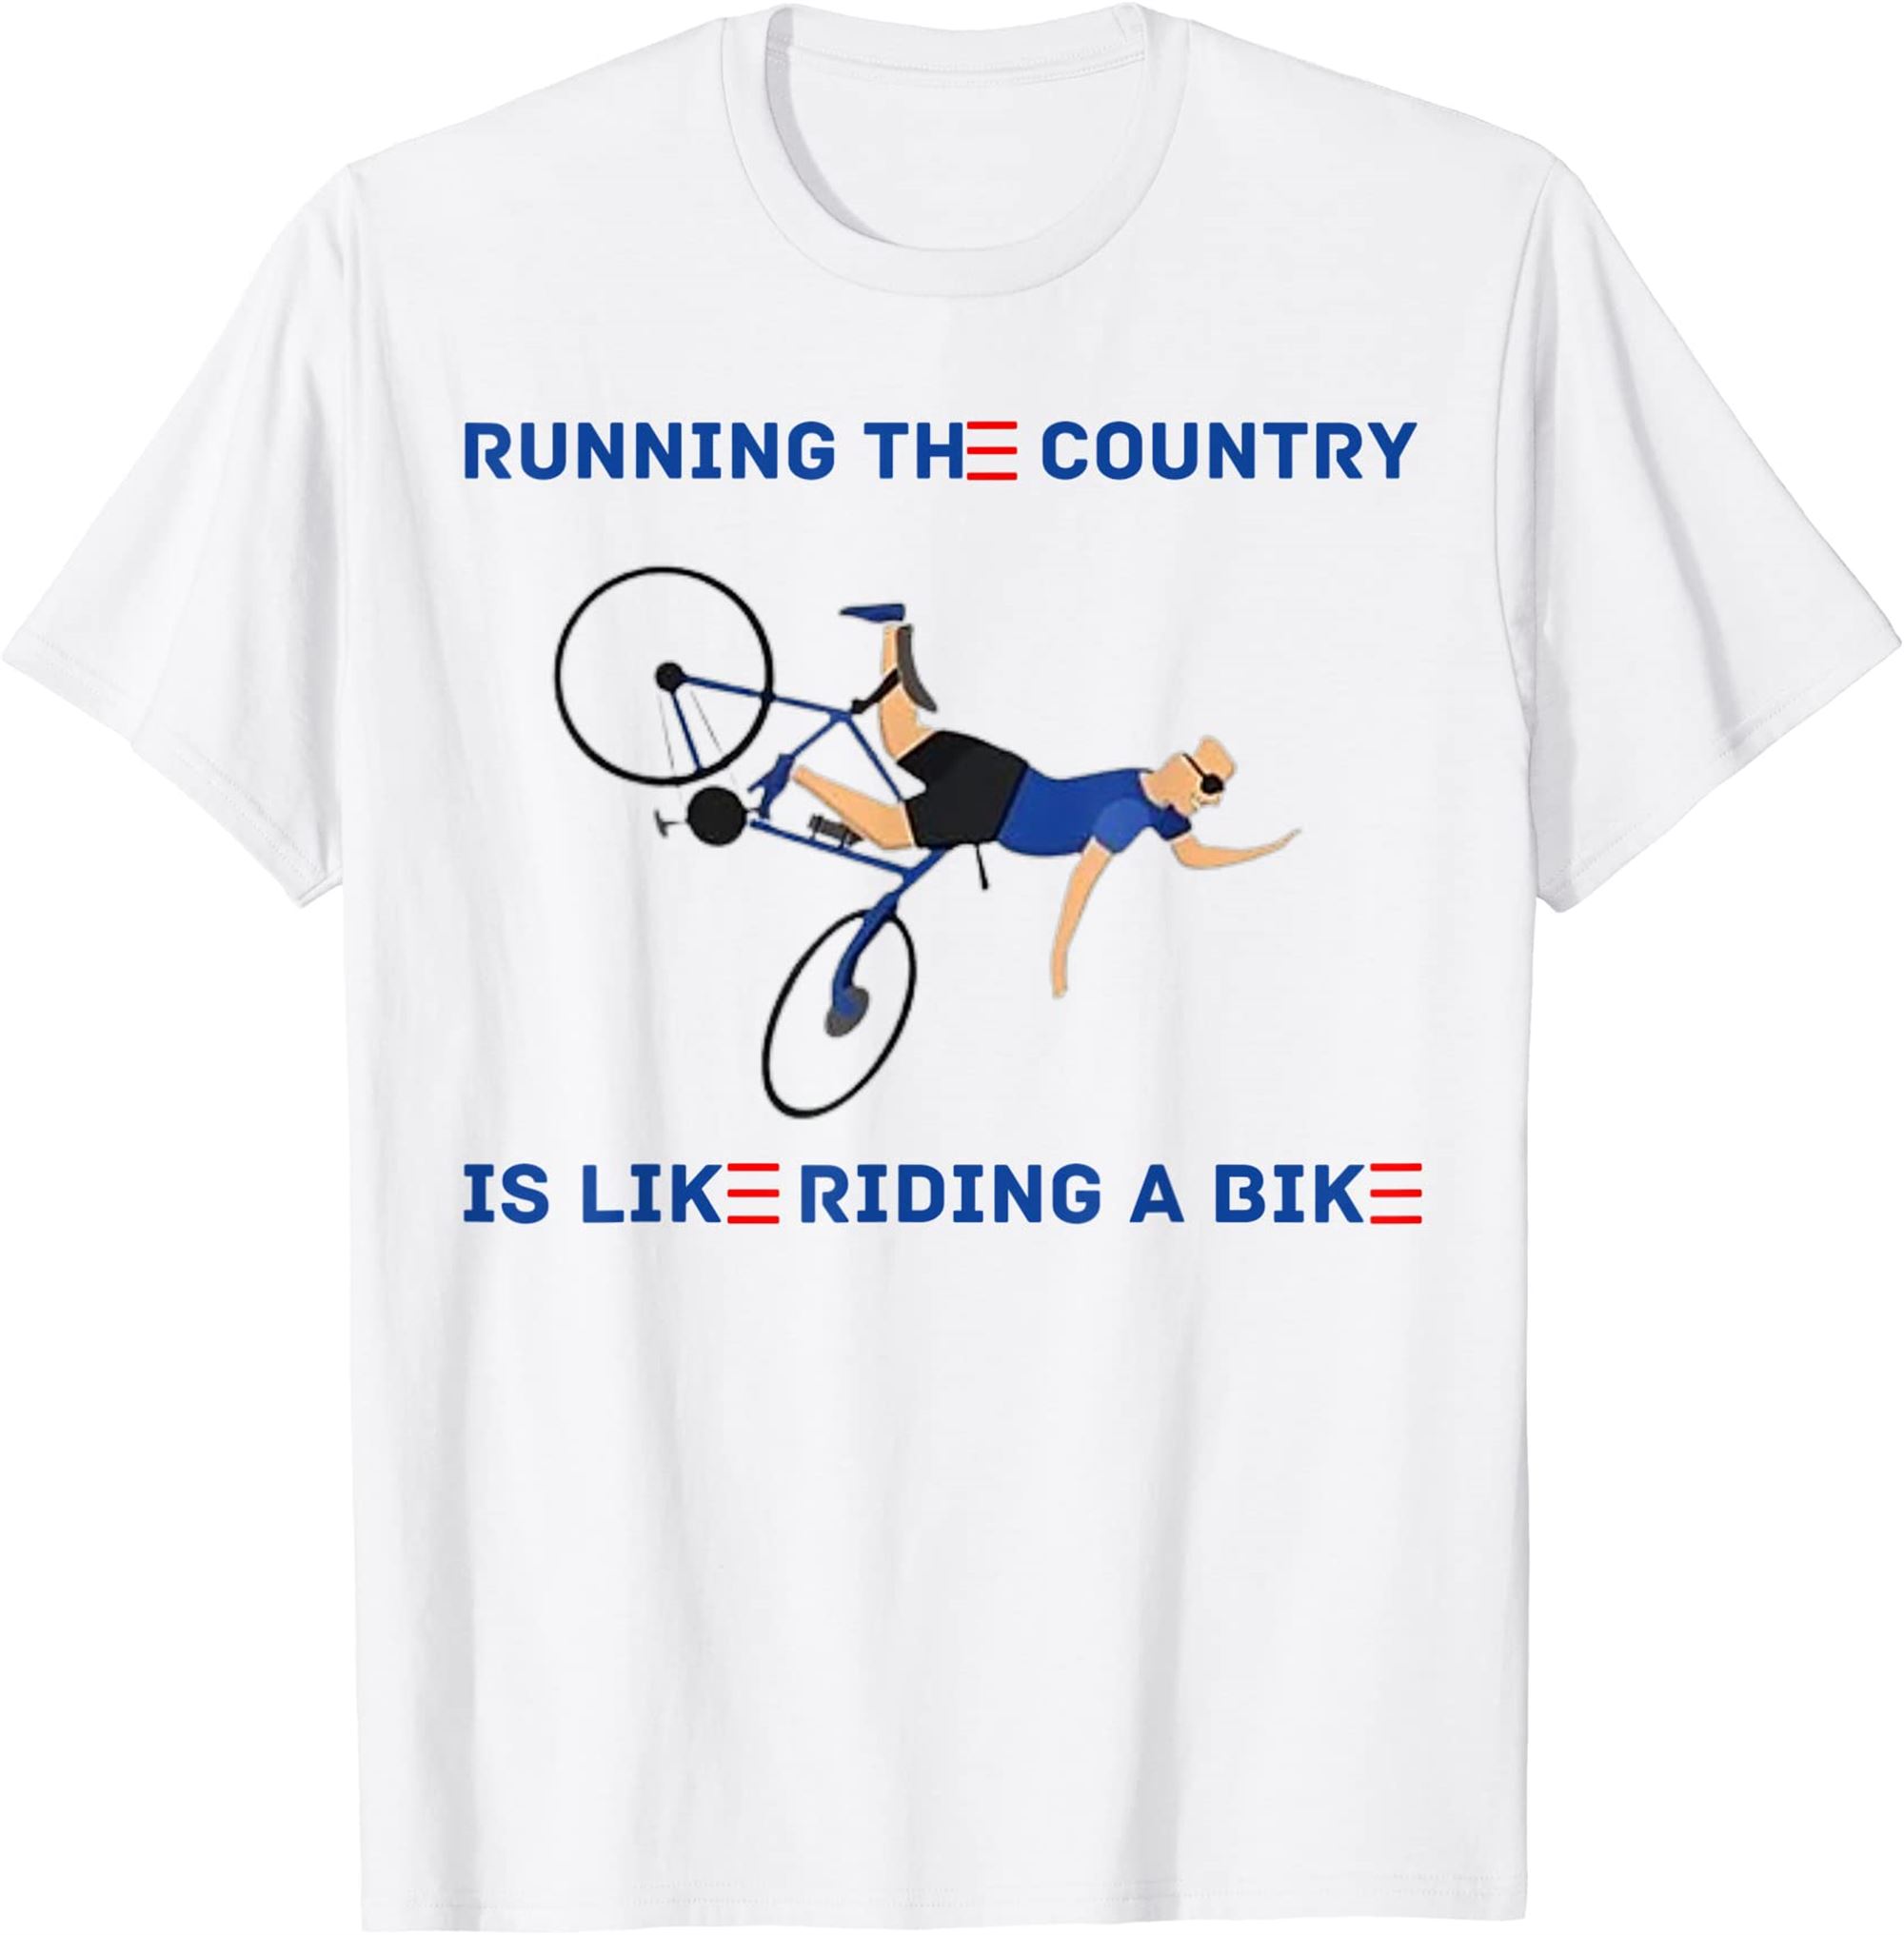 Joe Biden Falling On His Bike Co Clothes T-shirt Full Size Up To 5xl